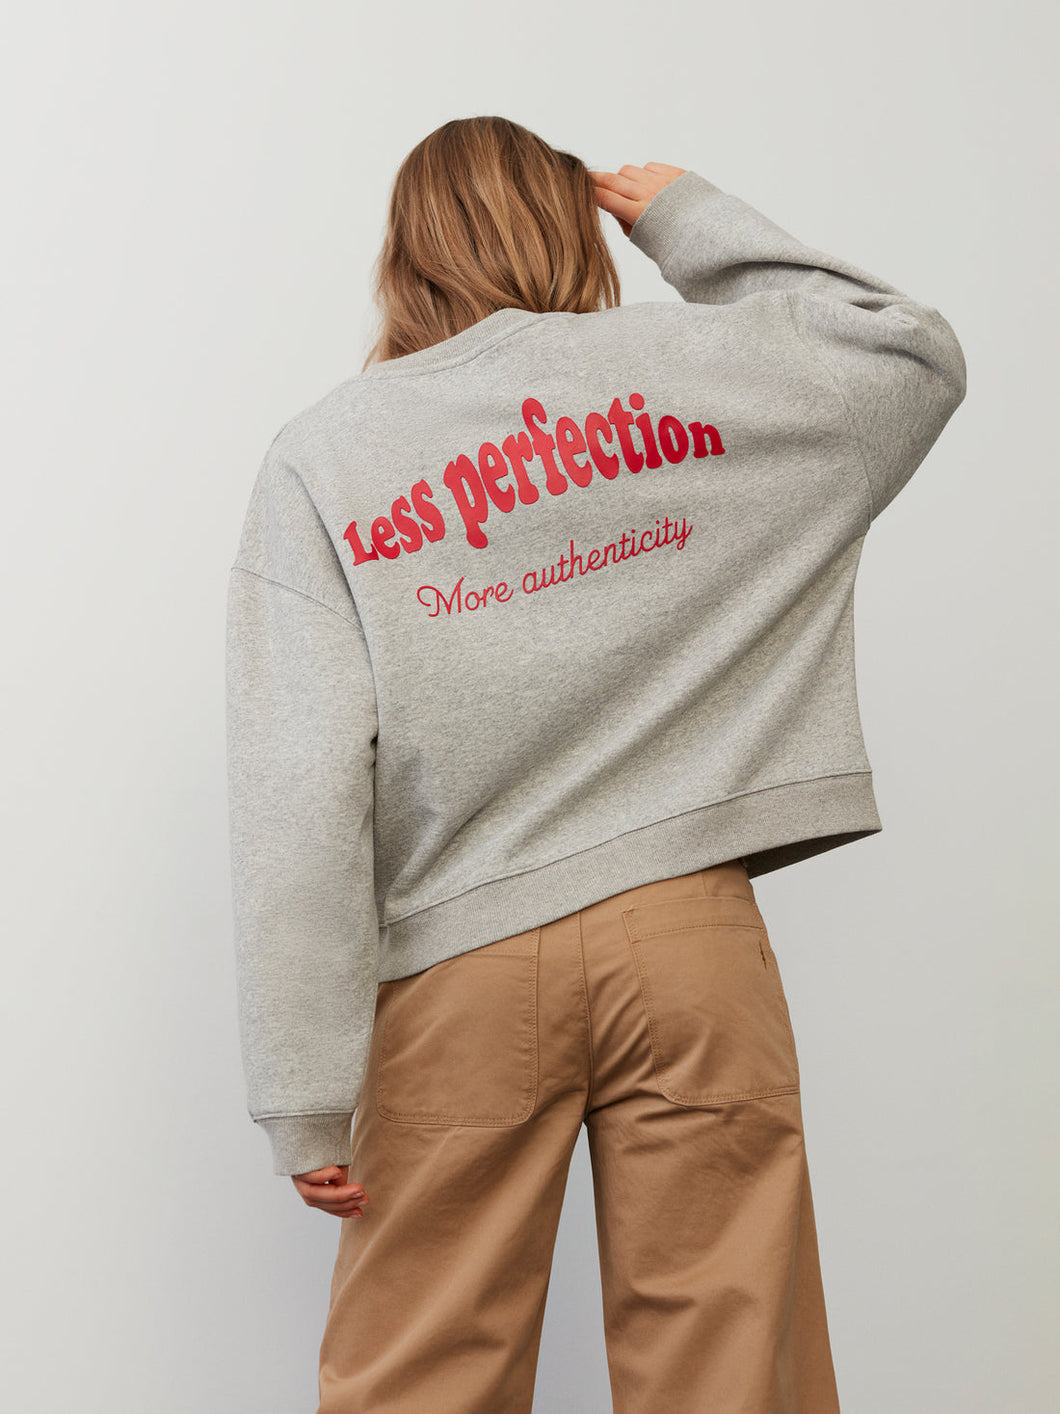 Sofie Schnoor - Less Perfection More Authenticity Sweatshirt